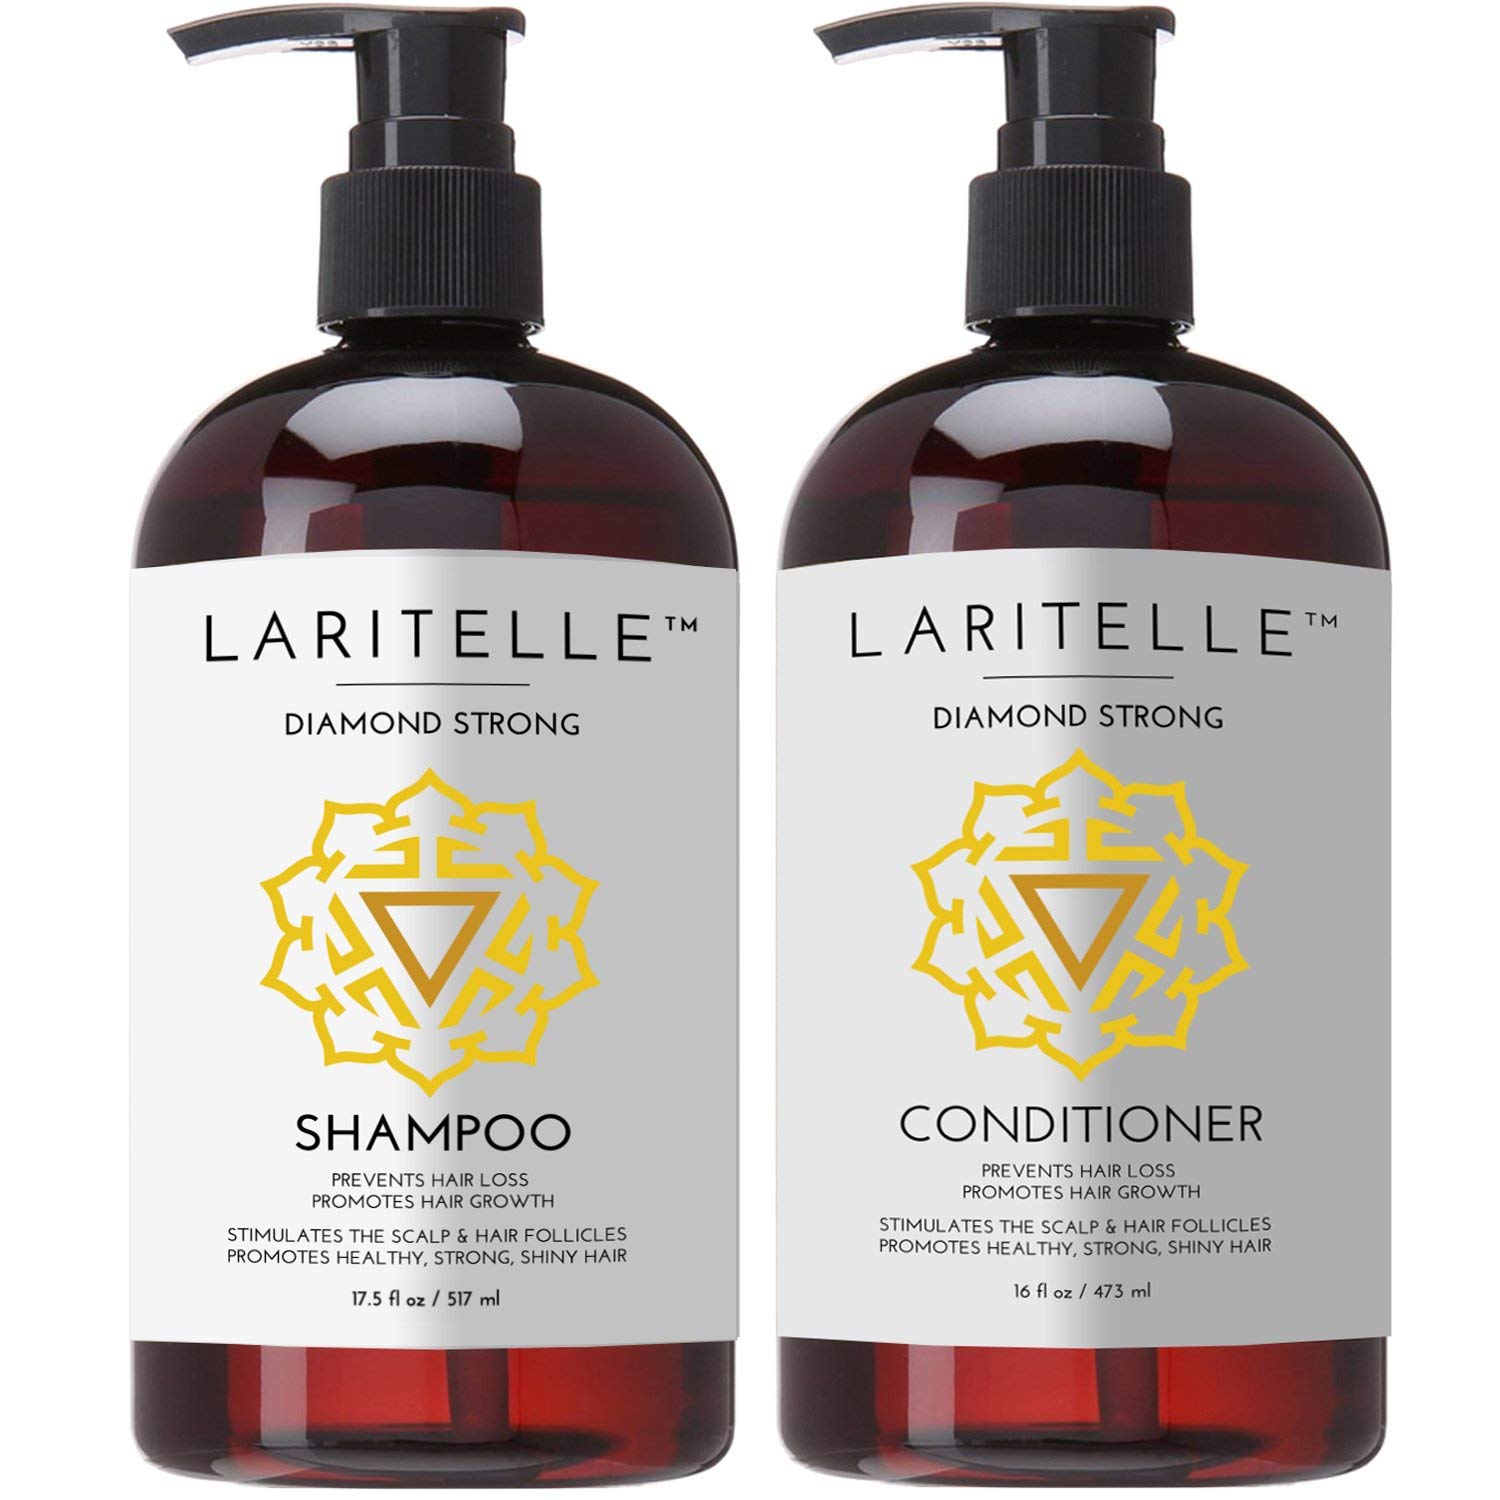 Laritelle Organic Shampoo 17 oz + Conditioner 16 oz | Prevents Hair Loss, Promotes Hair Growth | Argan Oil, Rosemary, Ginger & Cedarwood | NO GMO, Sulfates, Gluten, Alcohol, Parabens, Phthalates